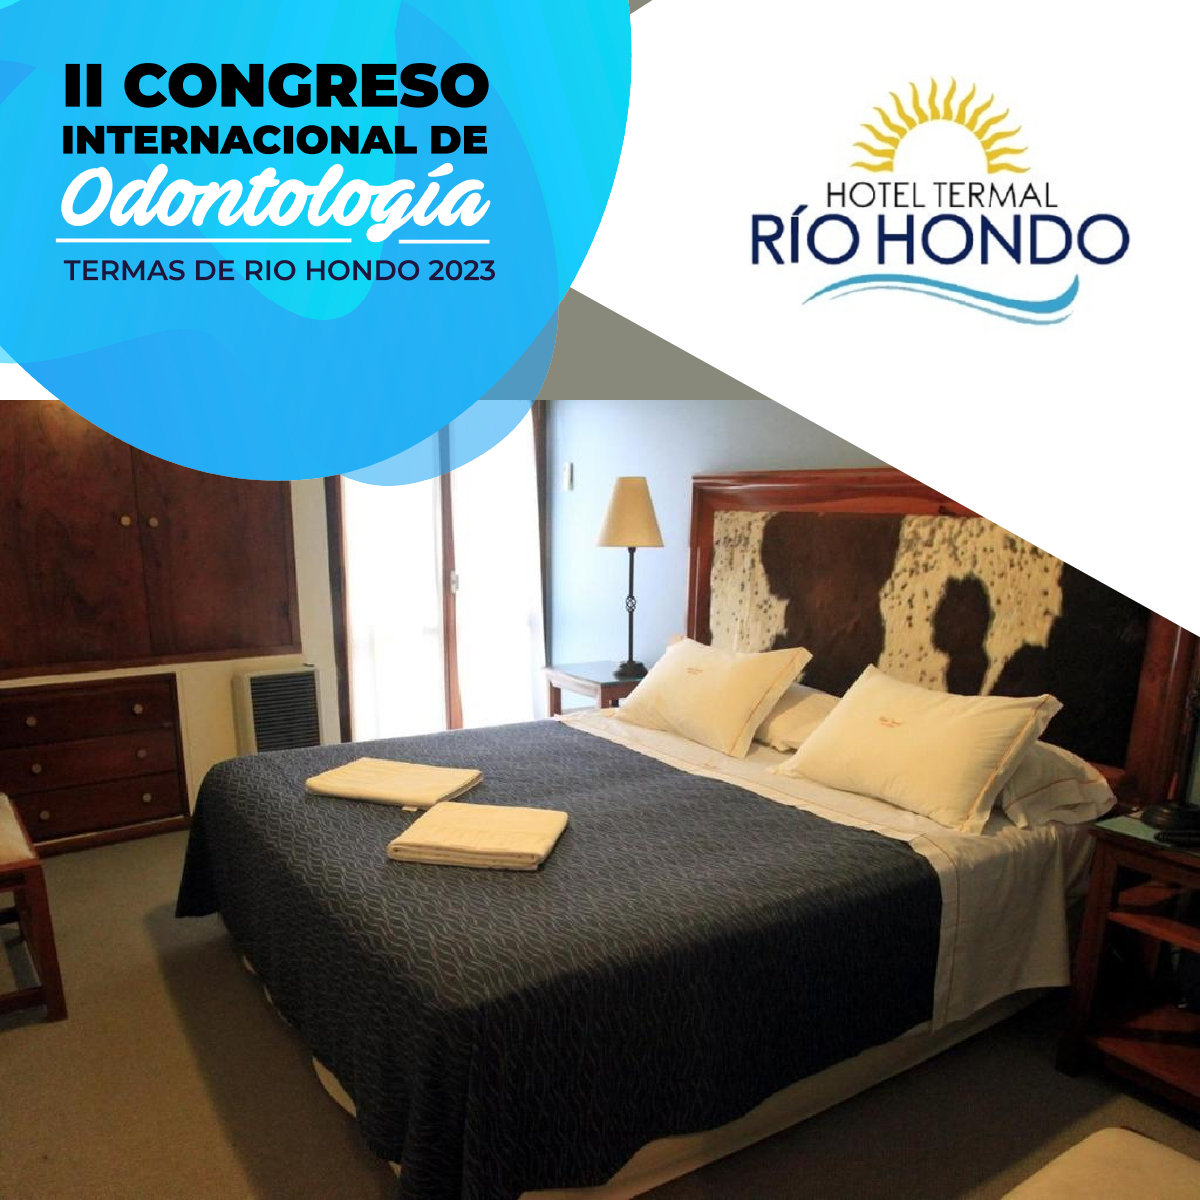 Hotel Termal Rio Hondo